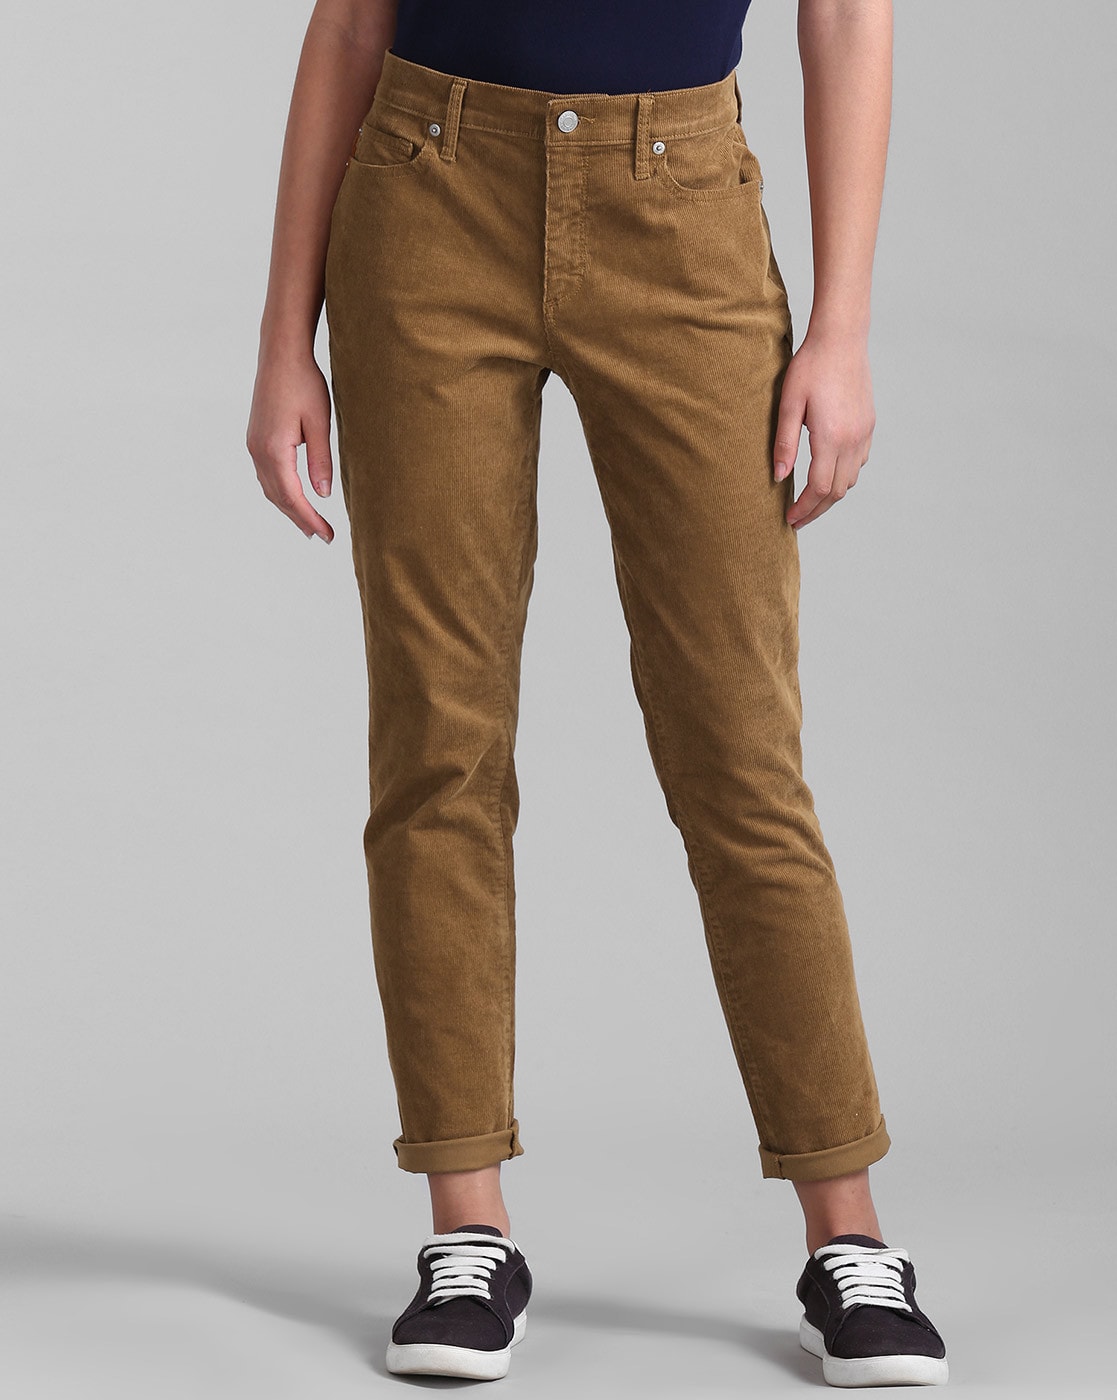 Buy > brown jeans women > in stock